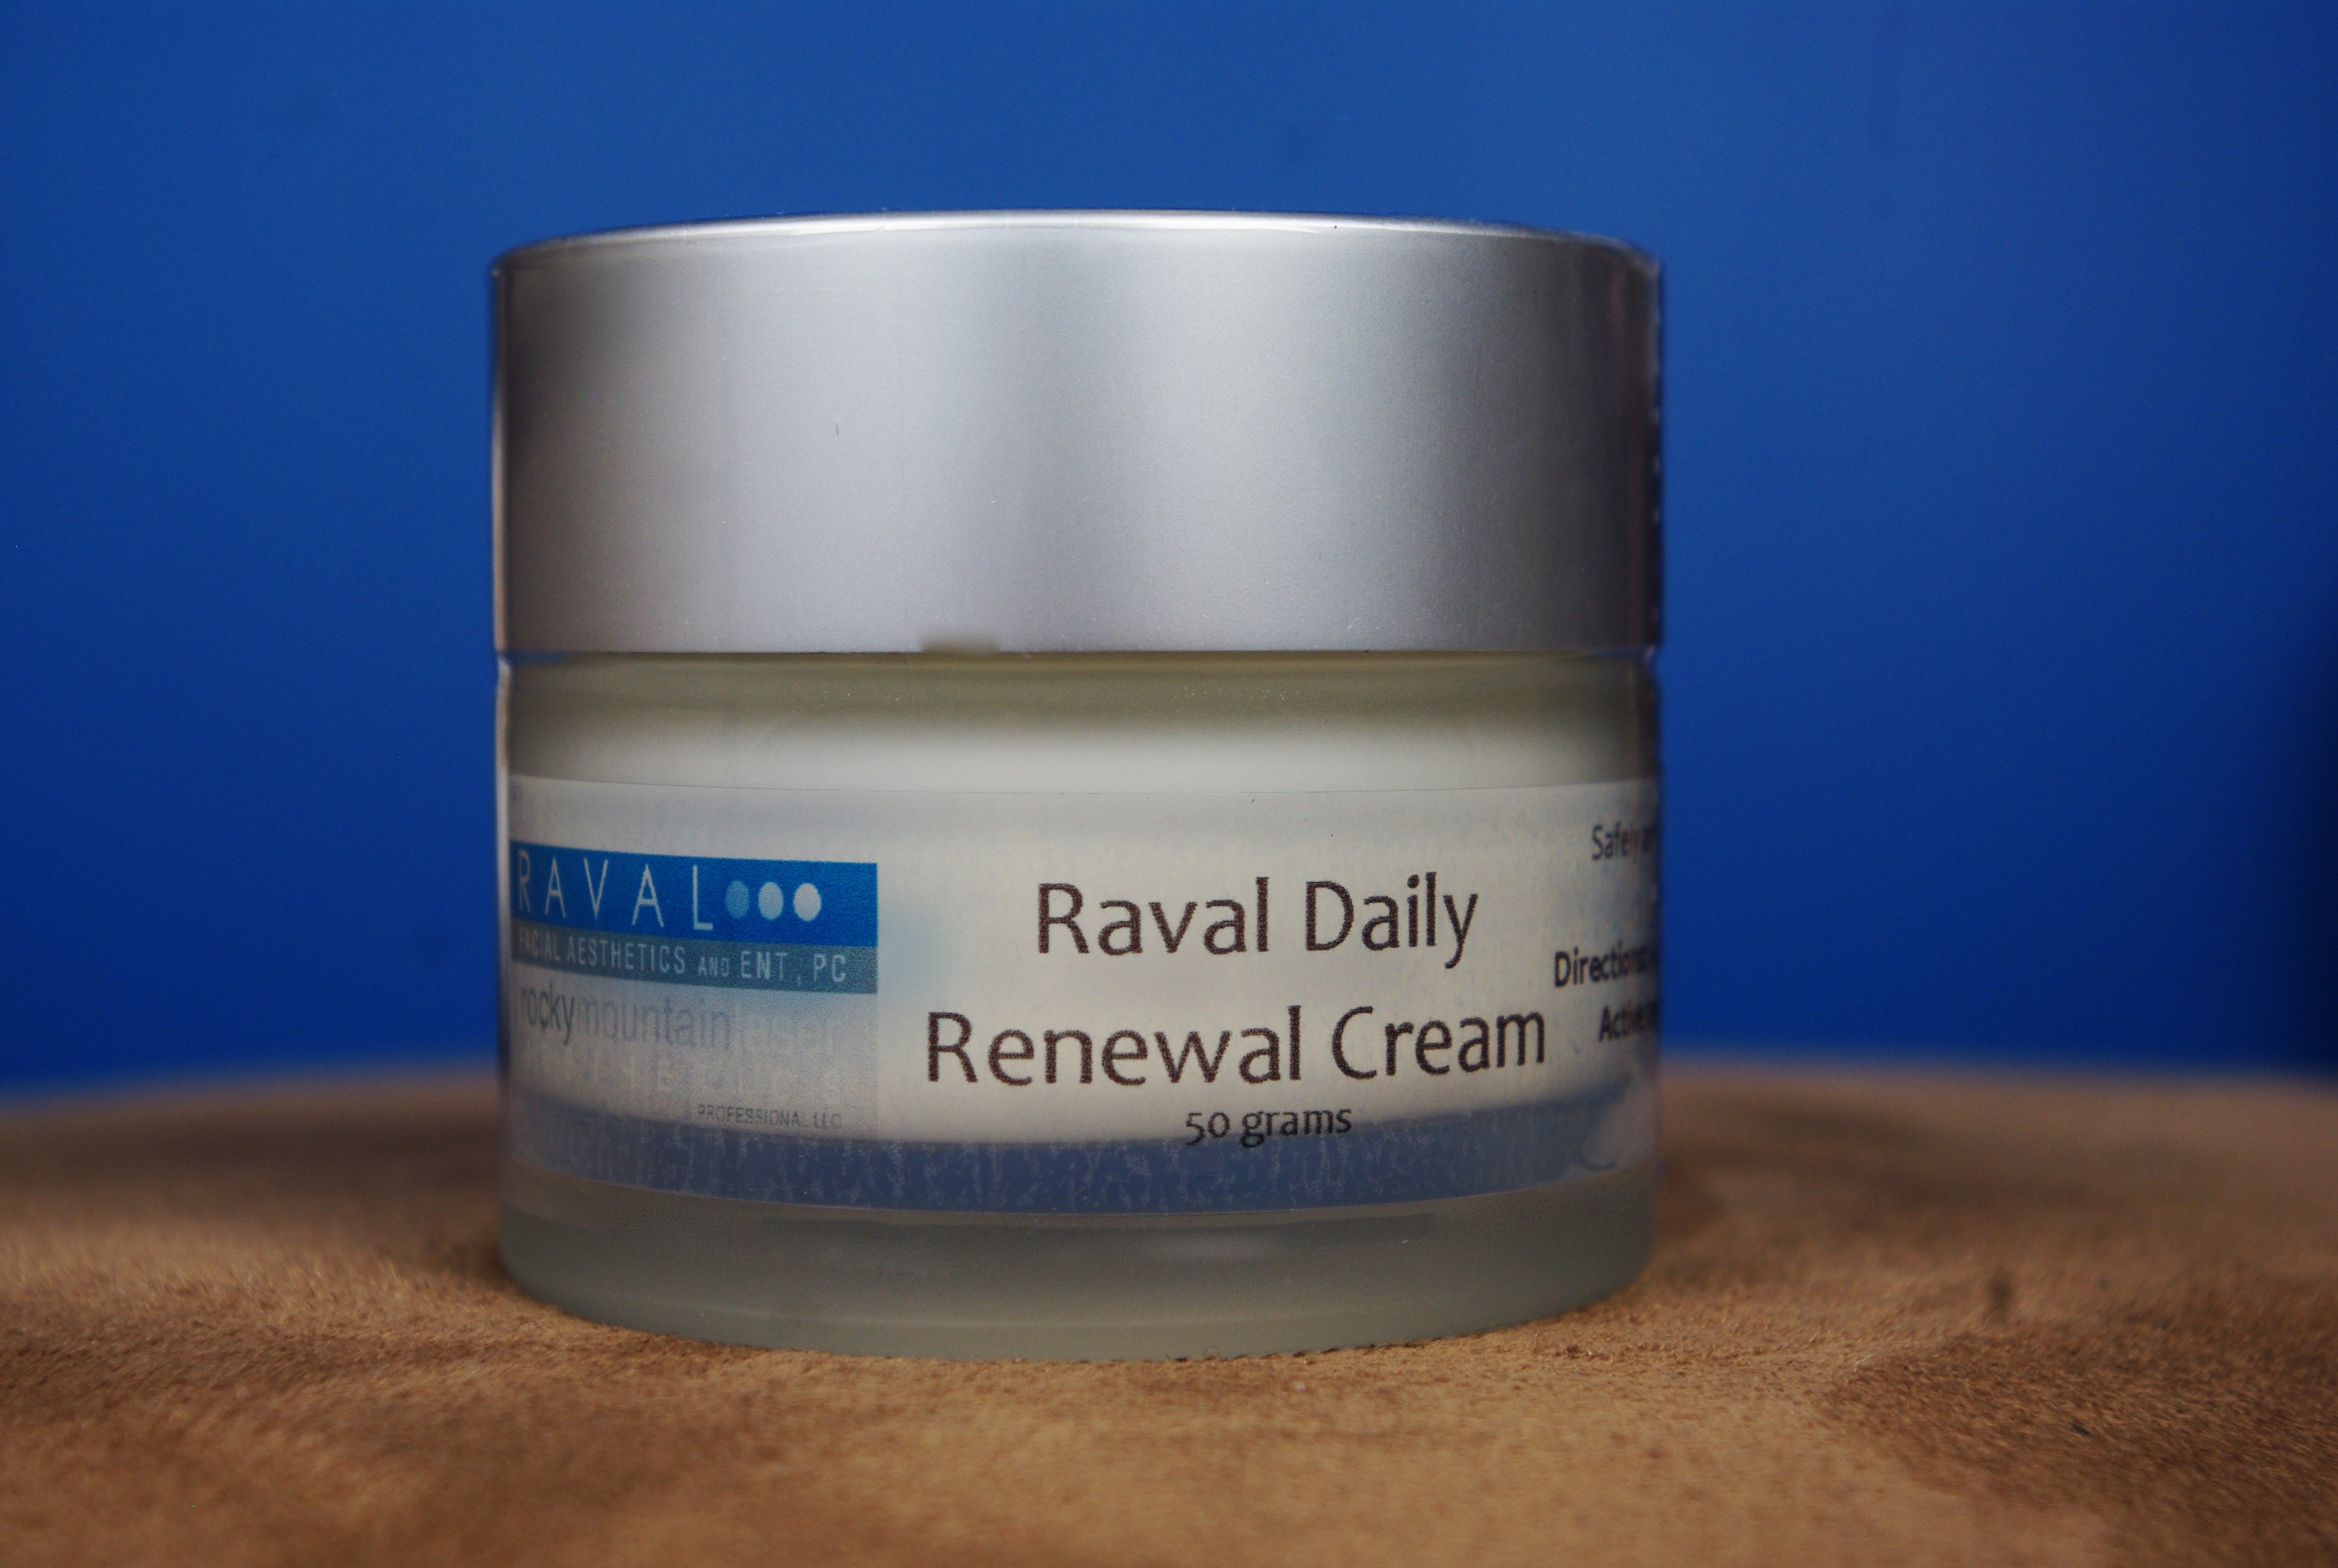 Raval Daily Renewal Cream